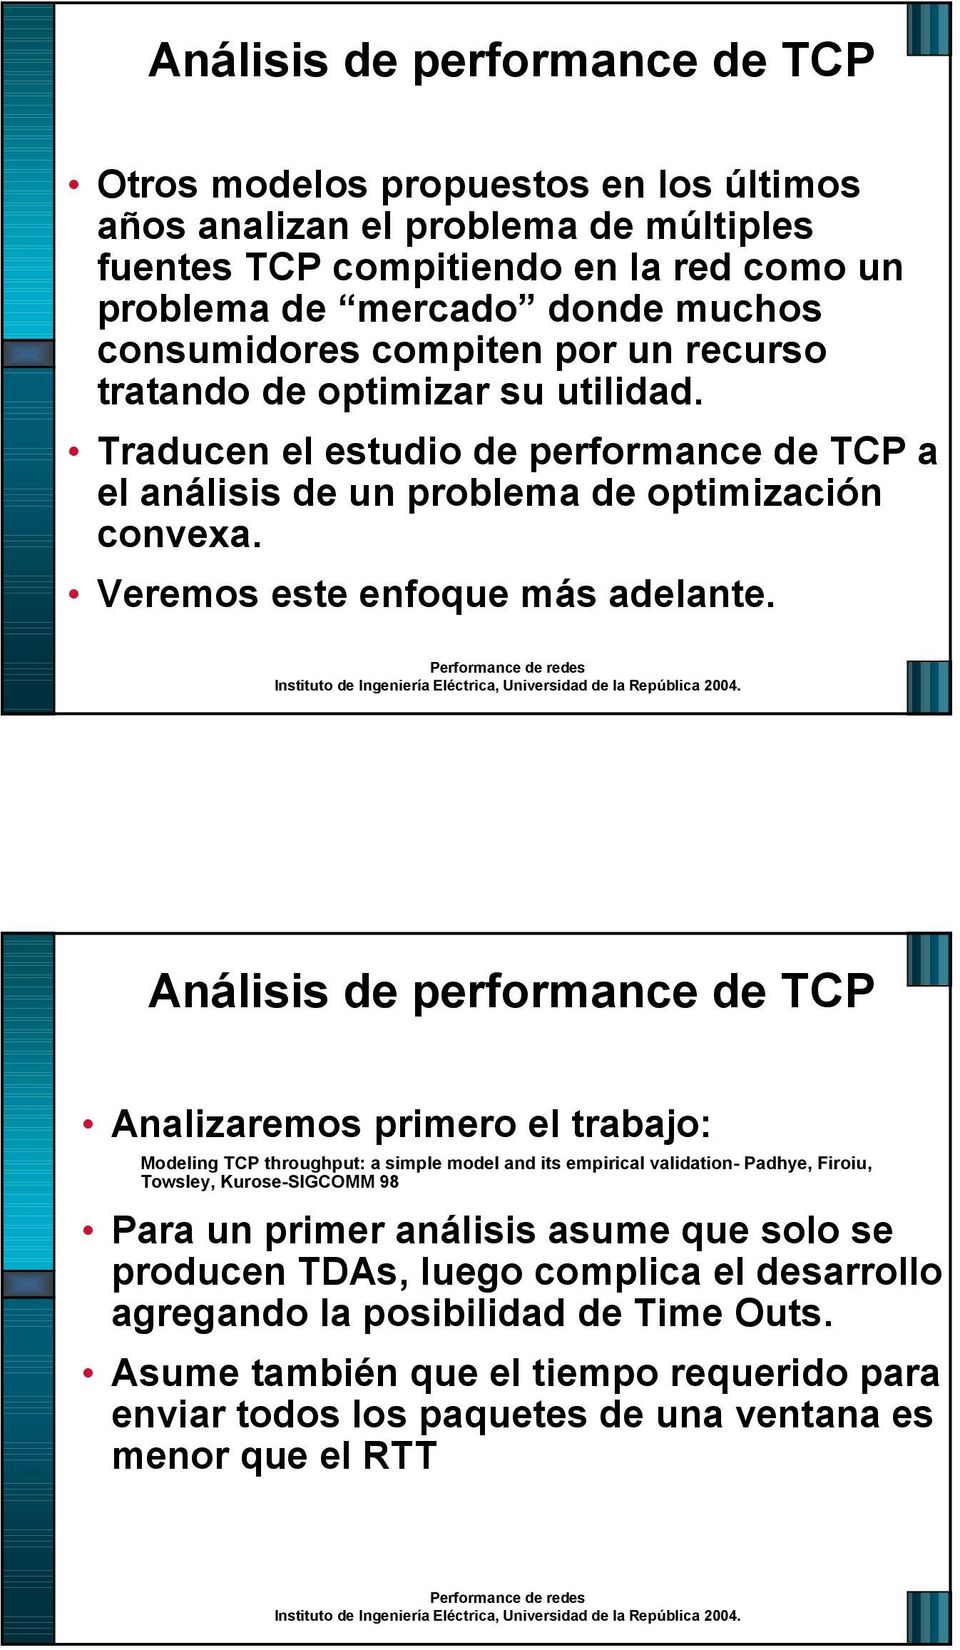 Análisis de performance de TCP Analizaremos primero el trabajo: Modeling TCP throughput: a simple model and its empirical validation- Padhye, Firoiu, Towsley, Kurose-SIGCOMM 98 Para un primer